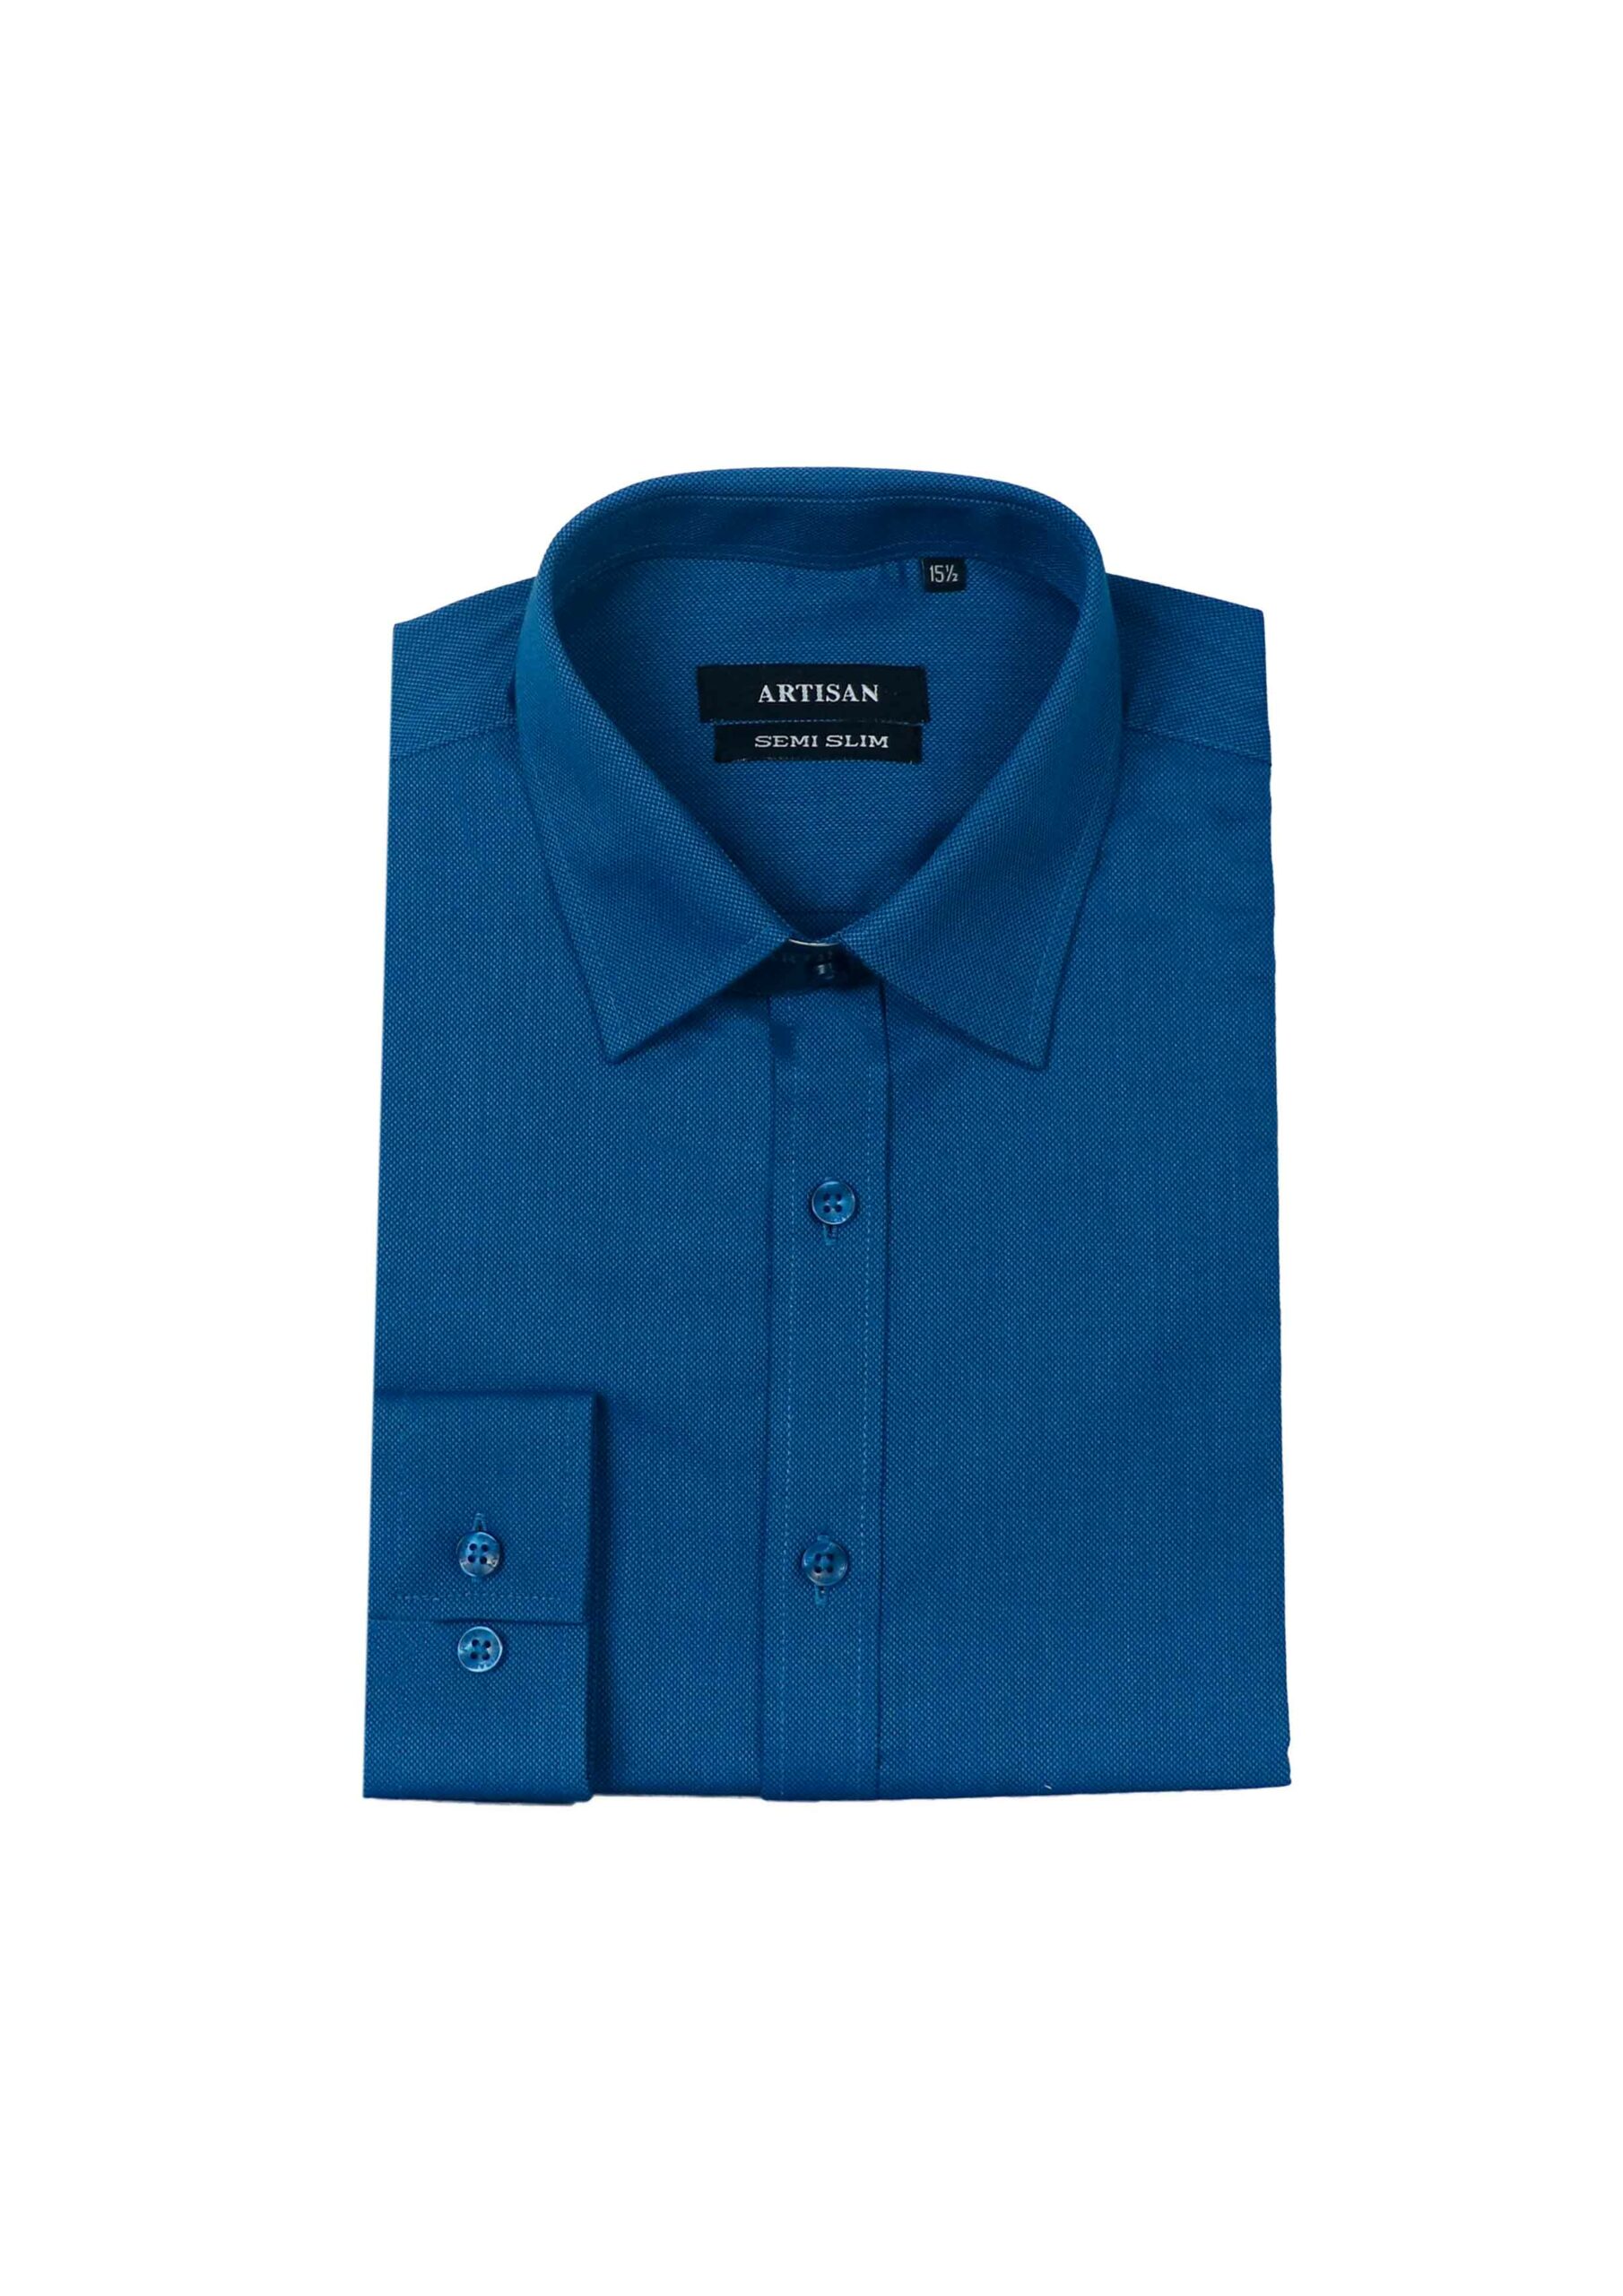 Men's Formal Shirt - Artisan Outfitters Ltd